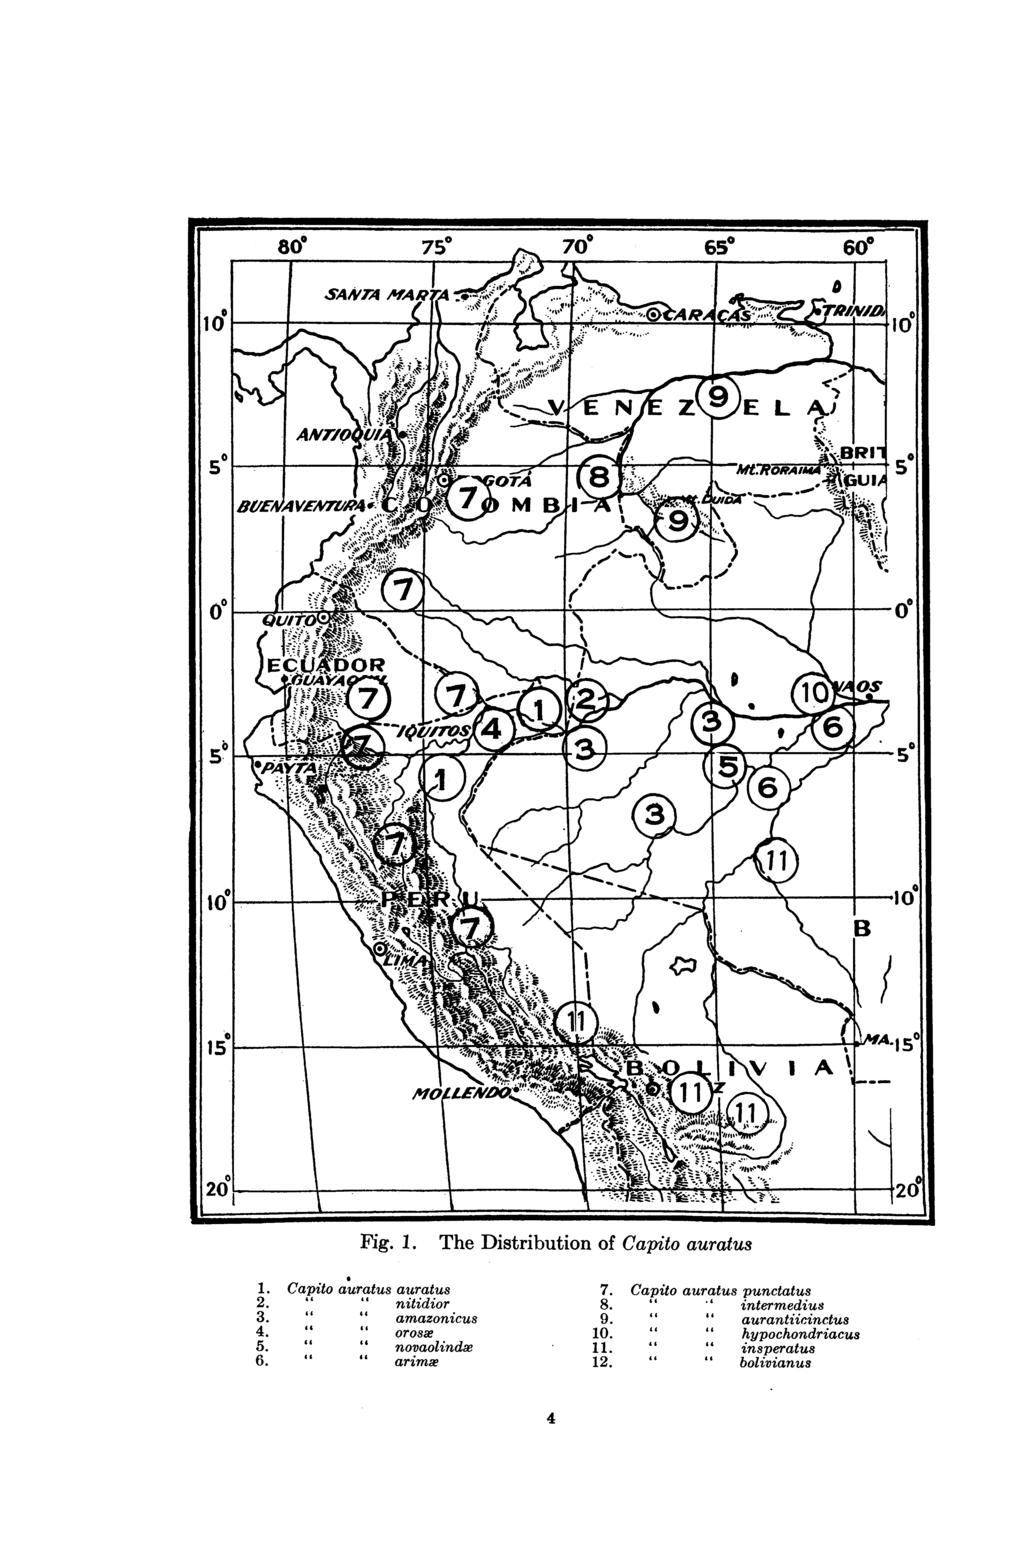 Fig. 1. The Distribution of Capito auratus 1. Capito auratus auratus 7. Capito auratus punctatus 2. 11 1. nitidior 8. " intermedius 3.